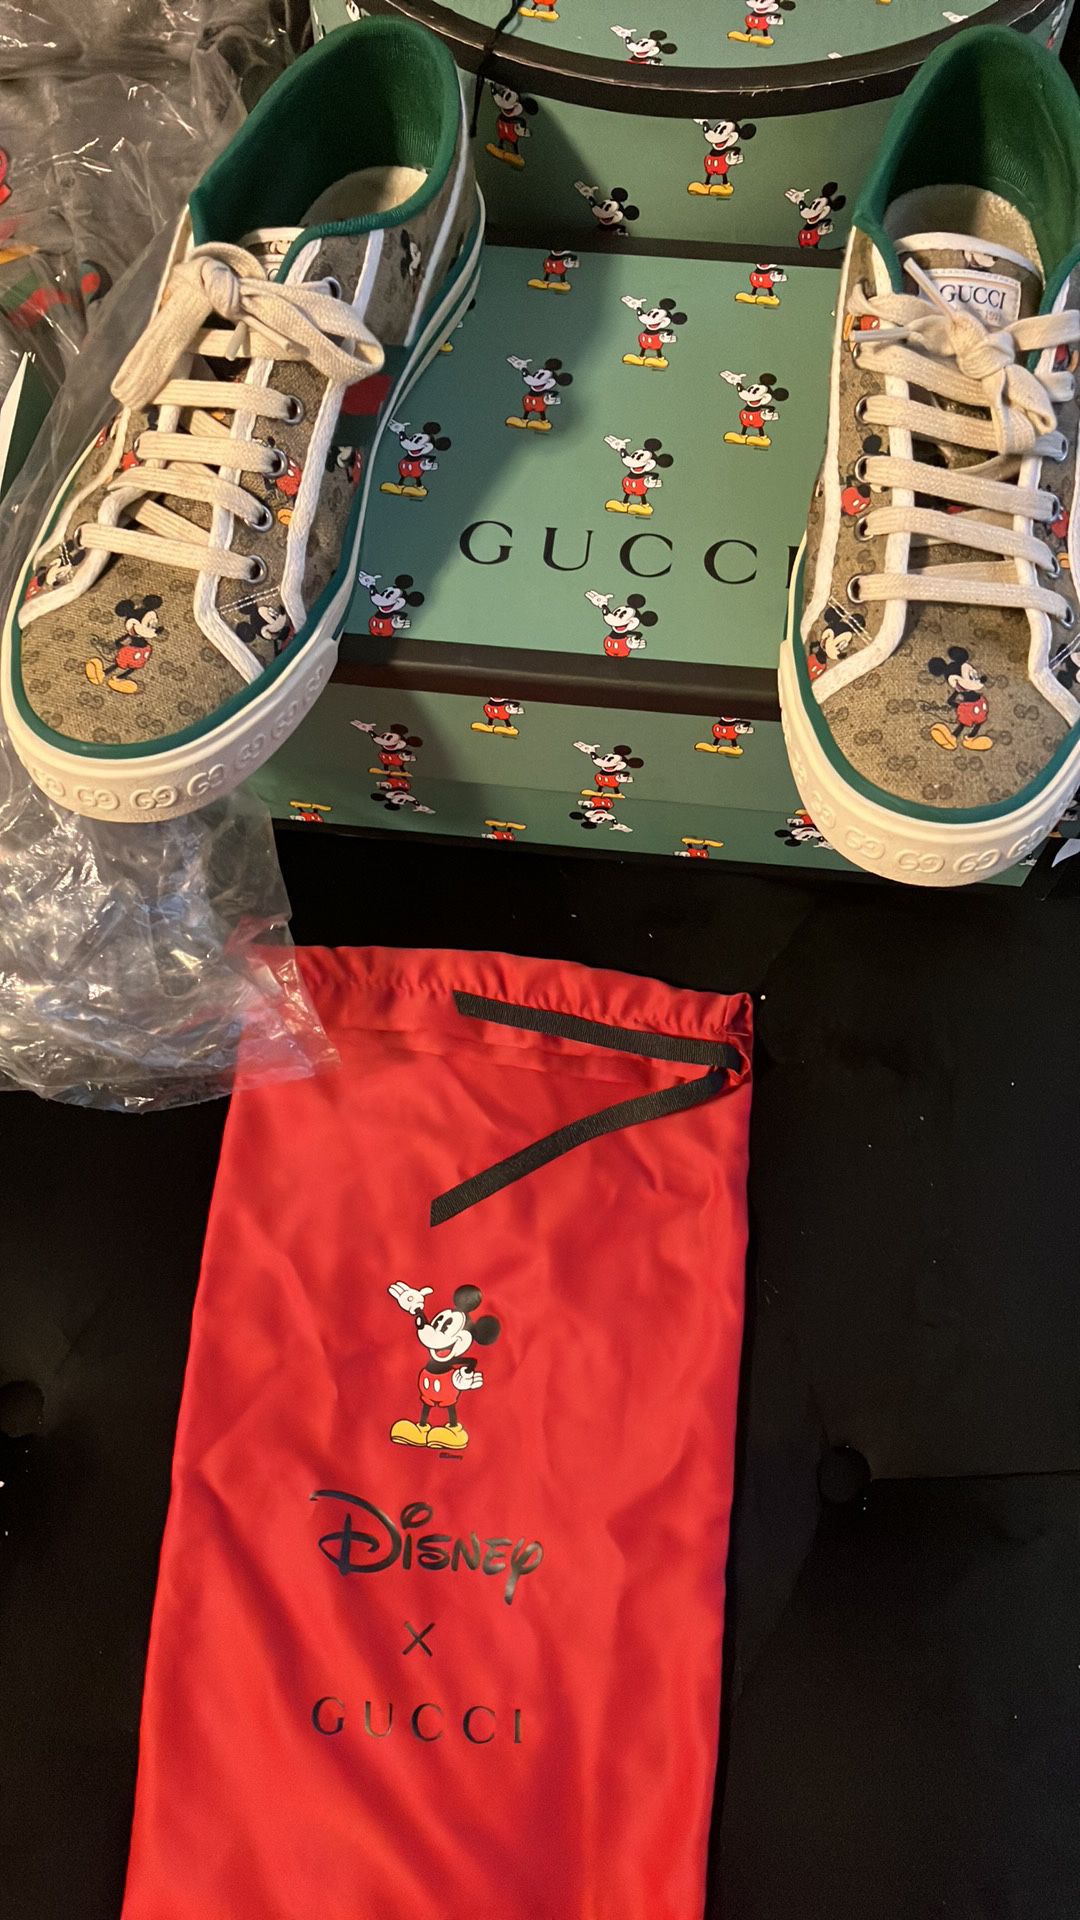 Gucci X Disney Collab